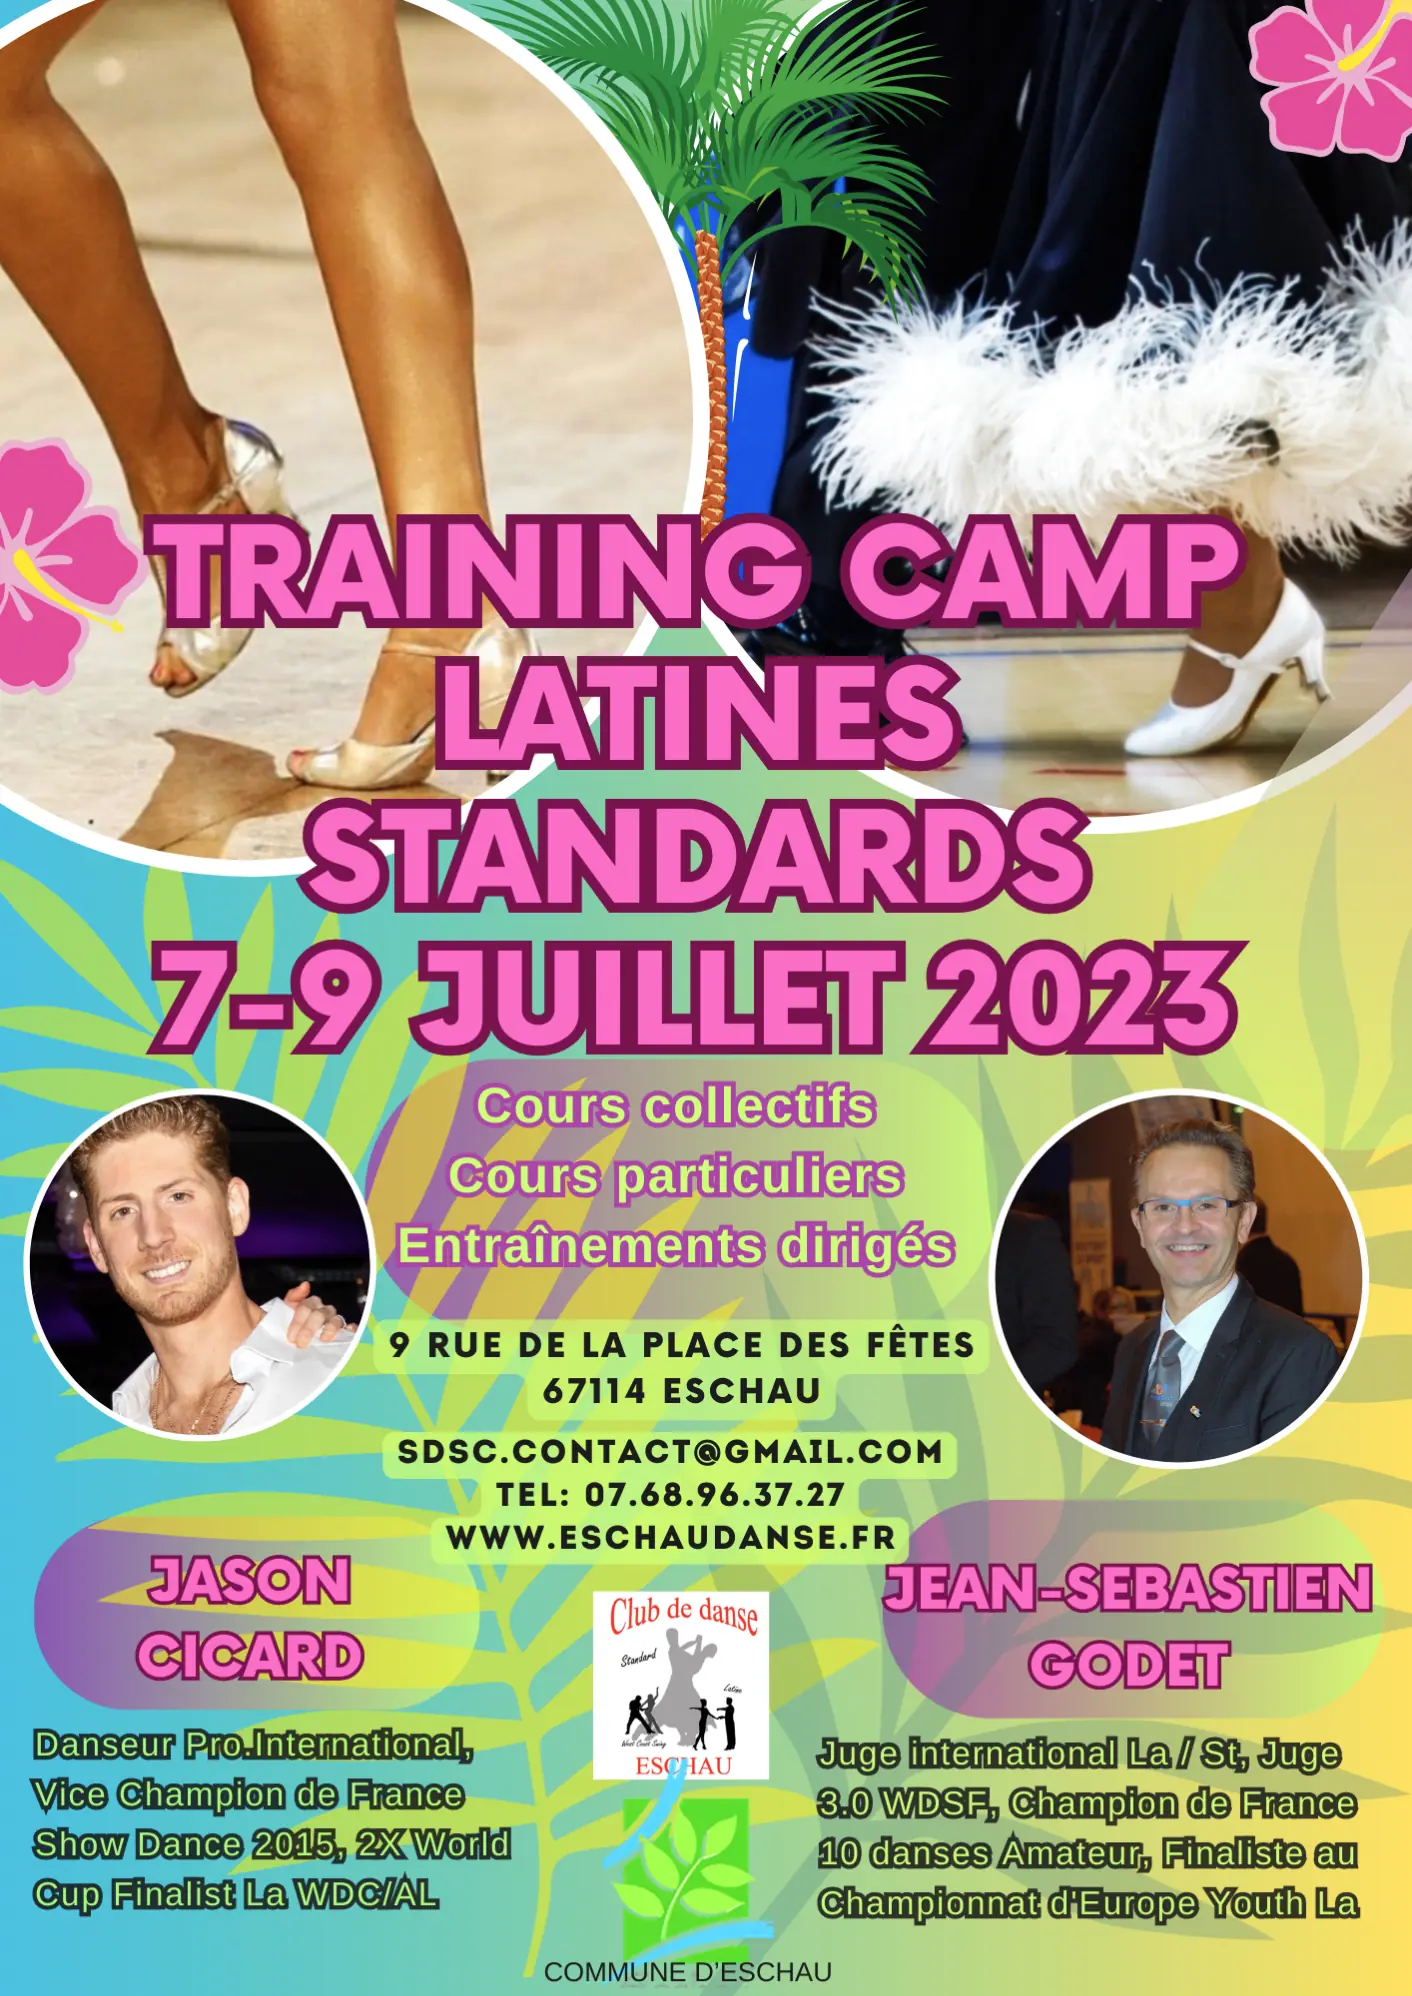 Training camp latines standards